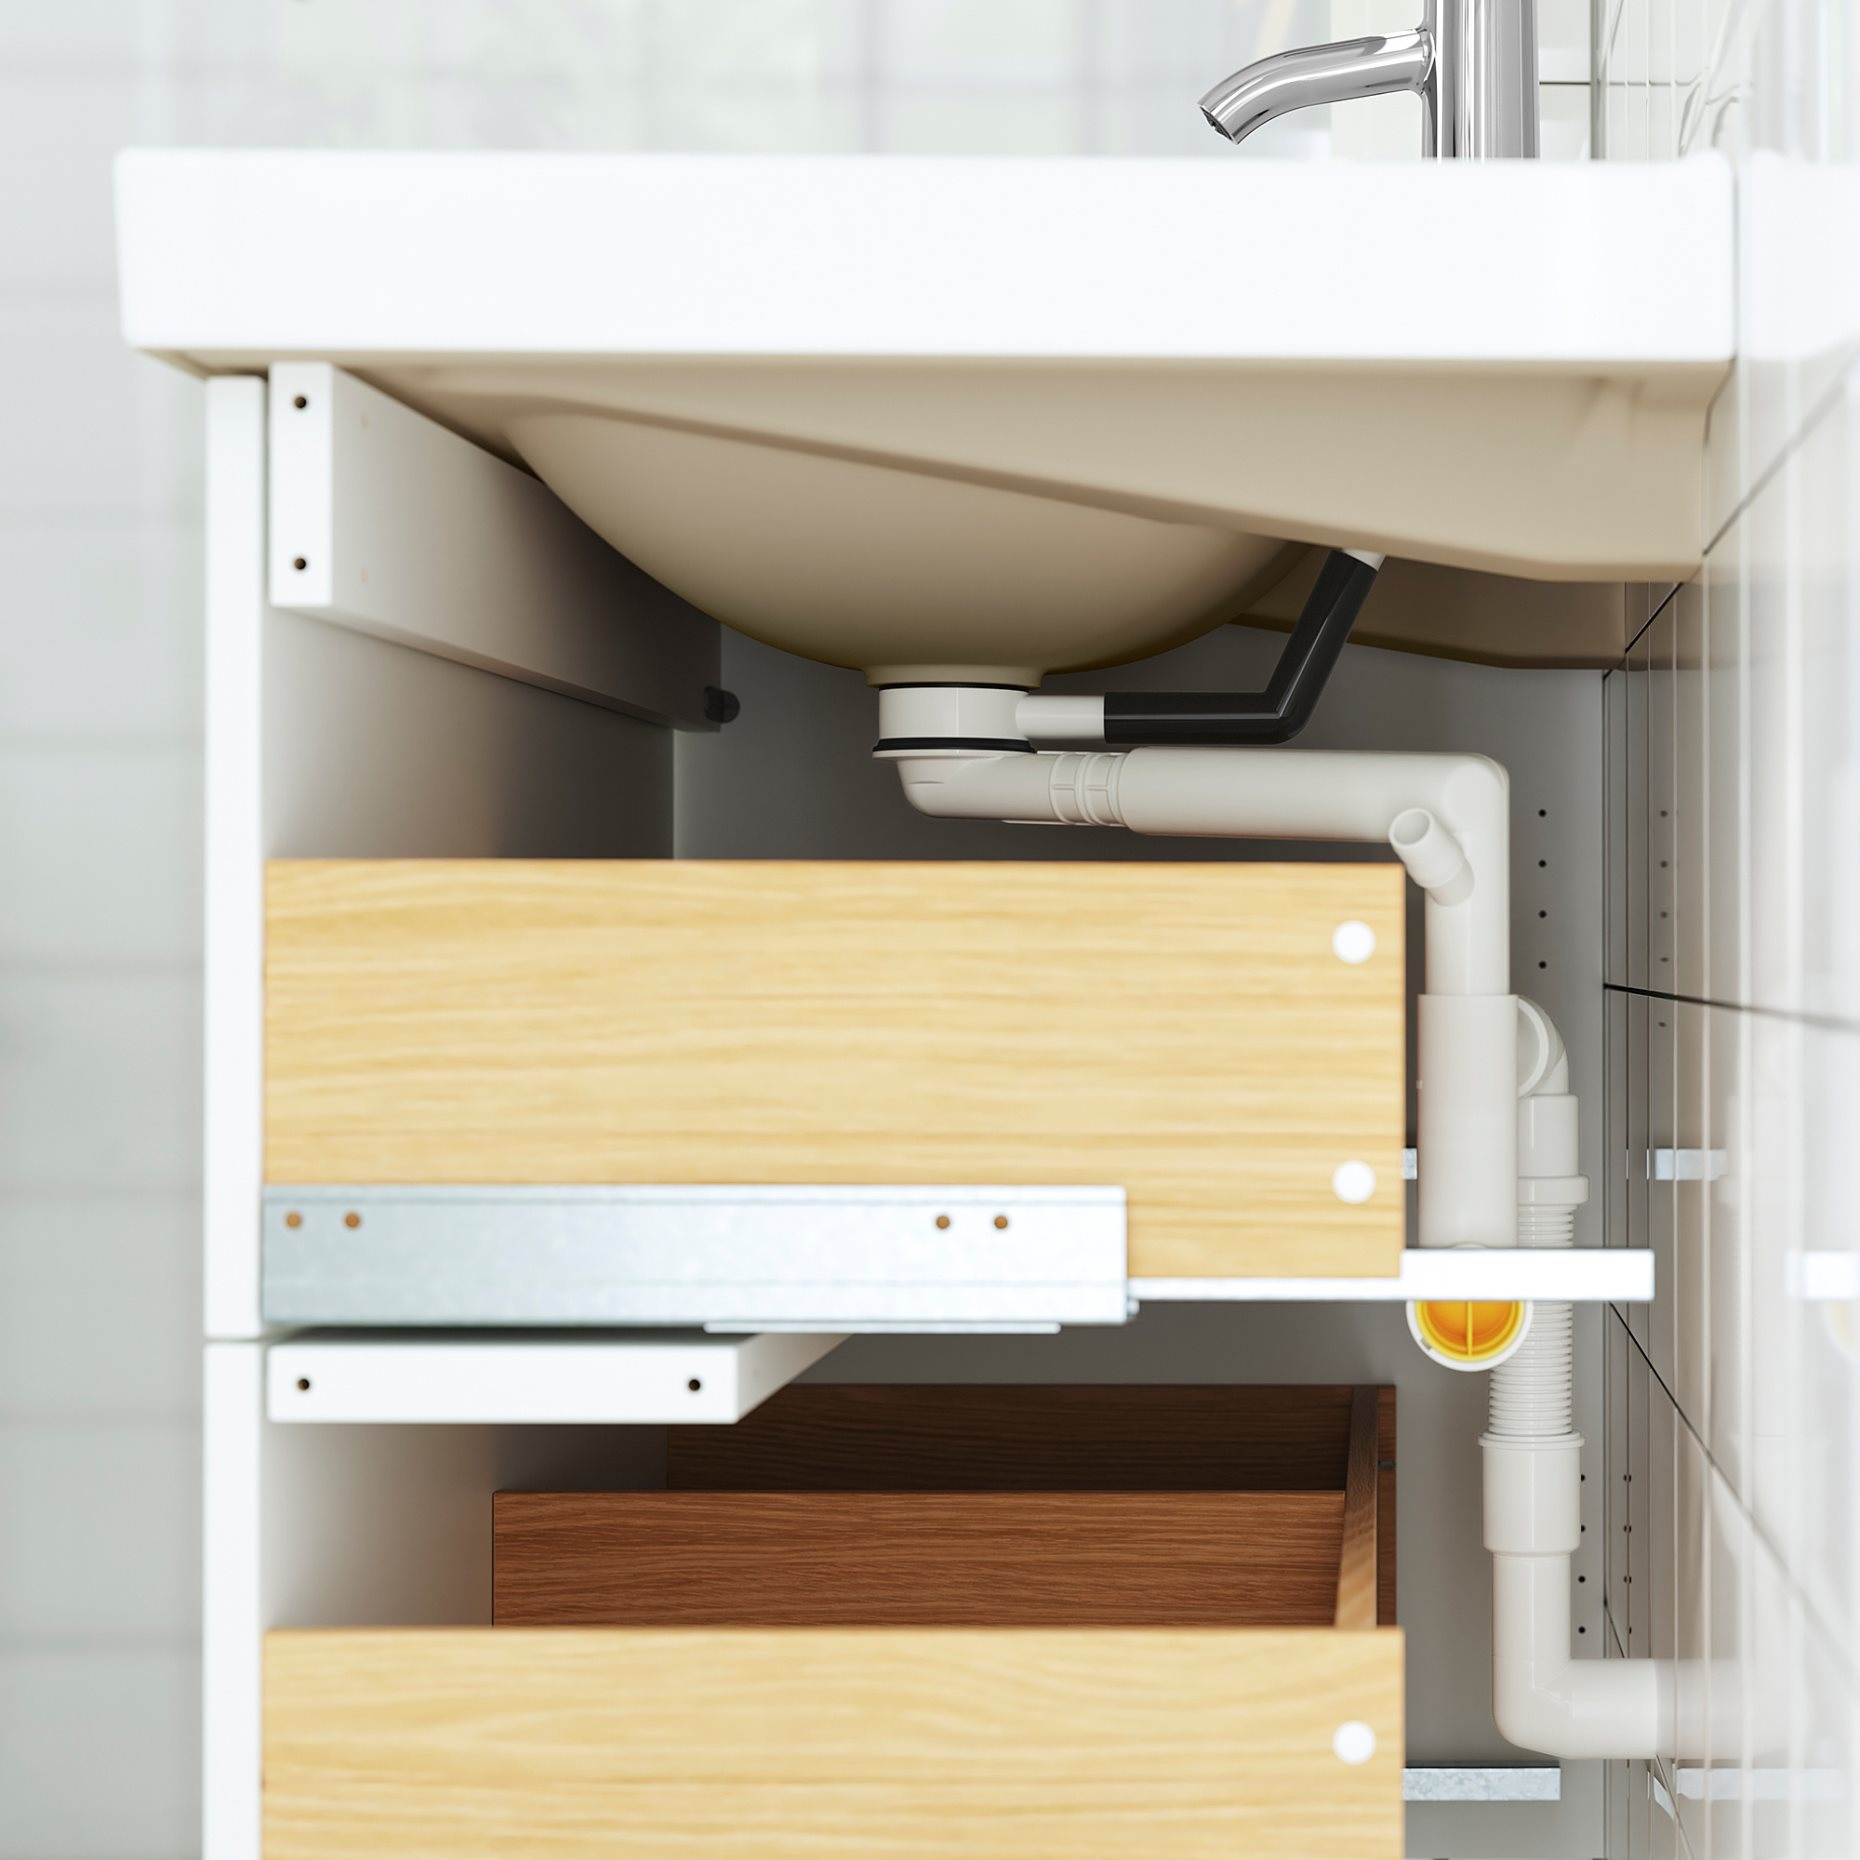 ANGSJON/KATTEVIK, wash-stand with drawers/wash-basin/tap, 82x49x80 cm, 495.214.14